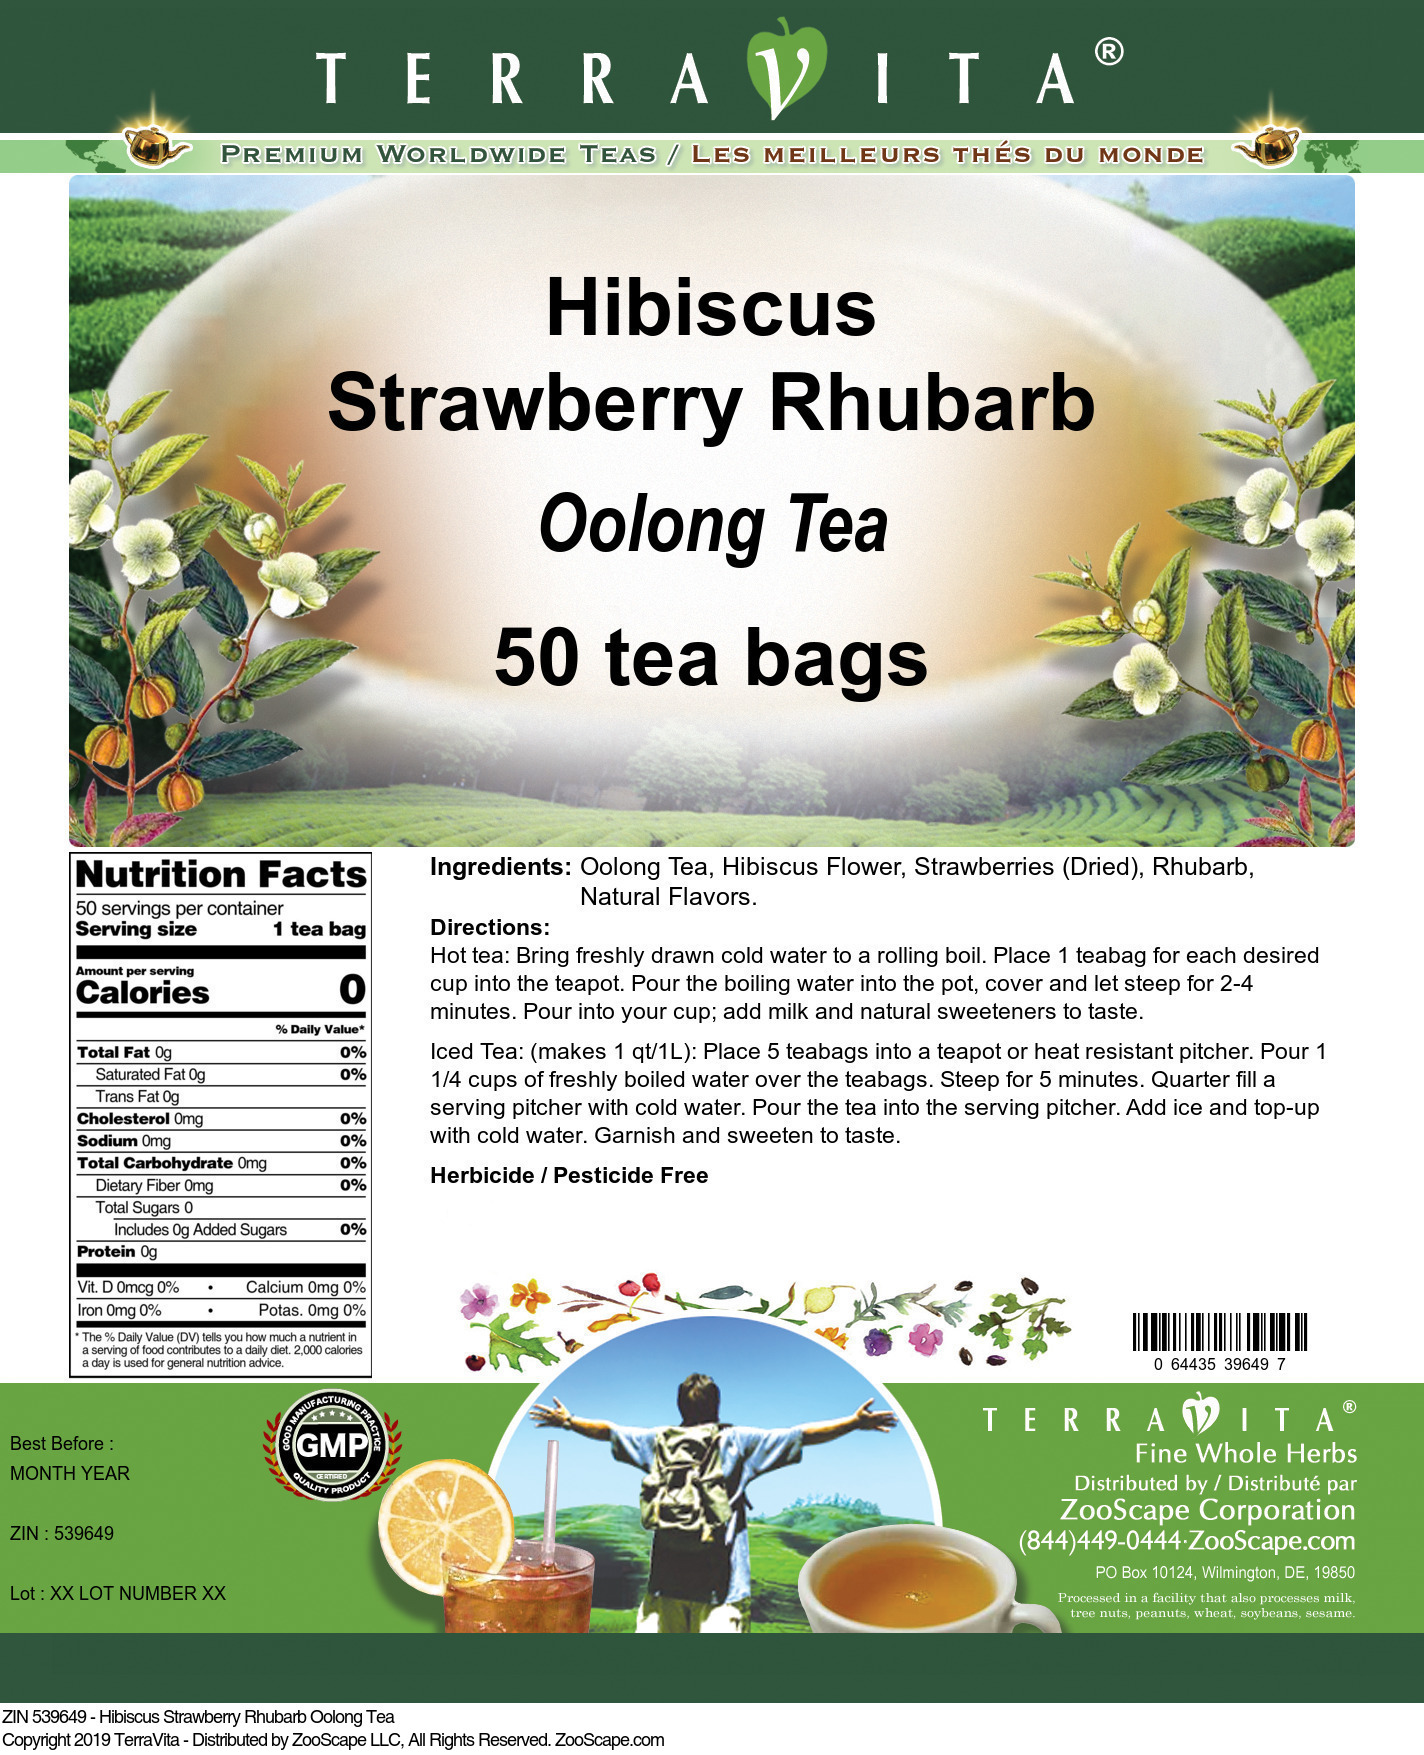 Hibiscus Strawberry Rhubarb Oolong Tea - Label